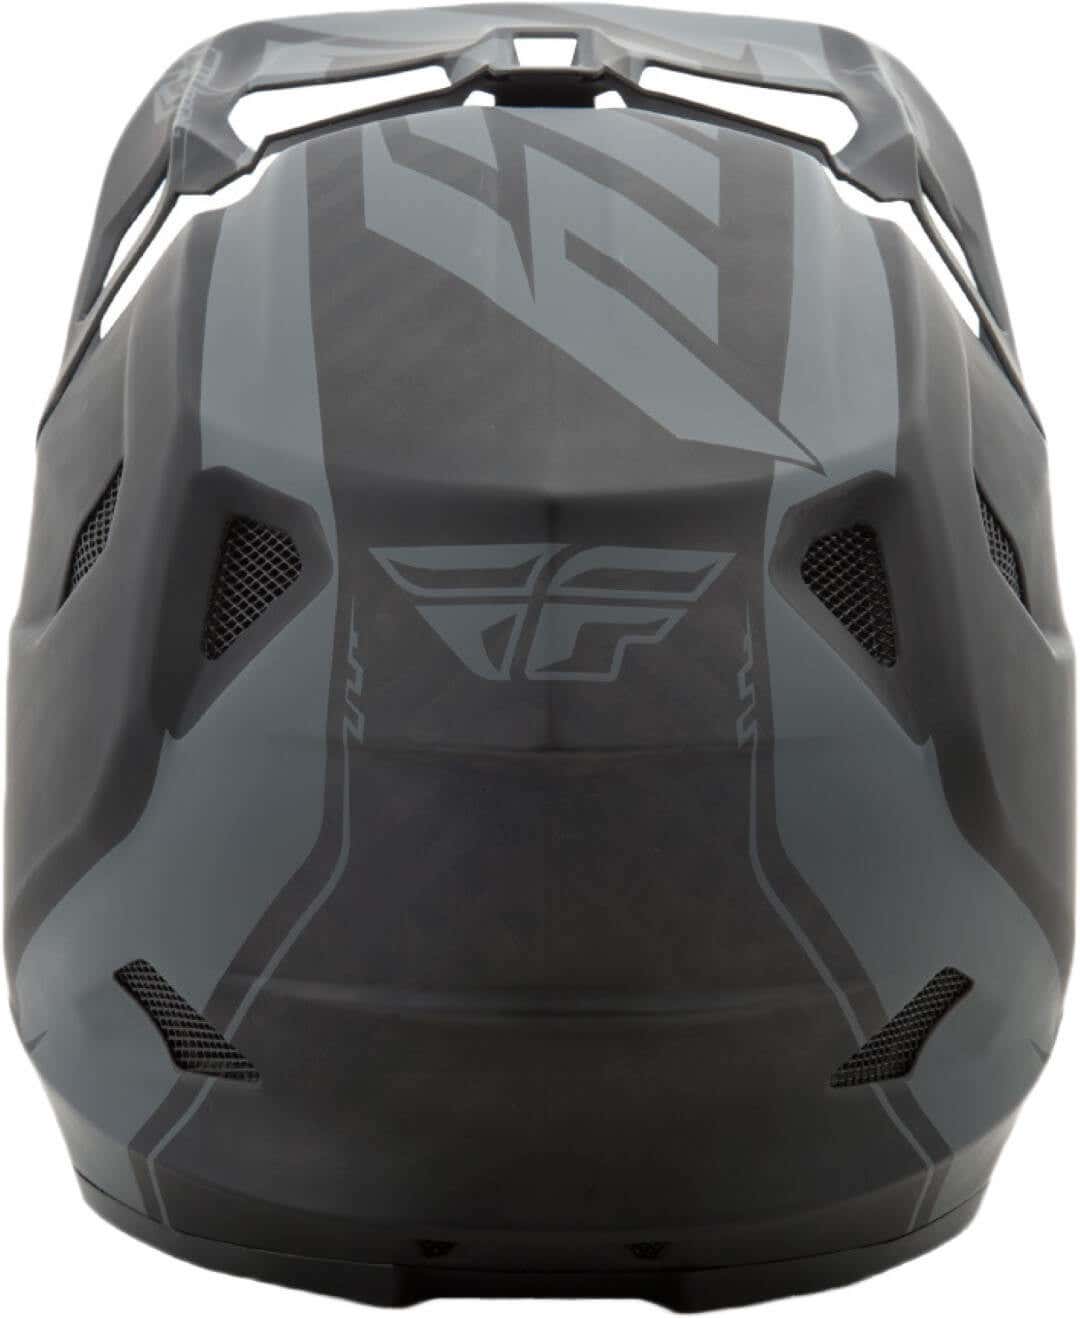 Werx Carbon Rival Helmet